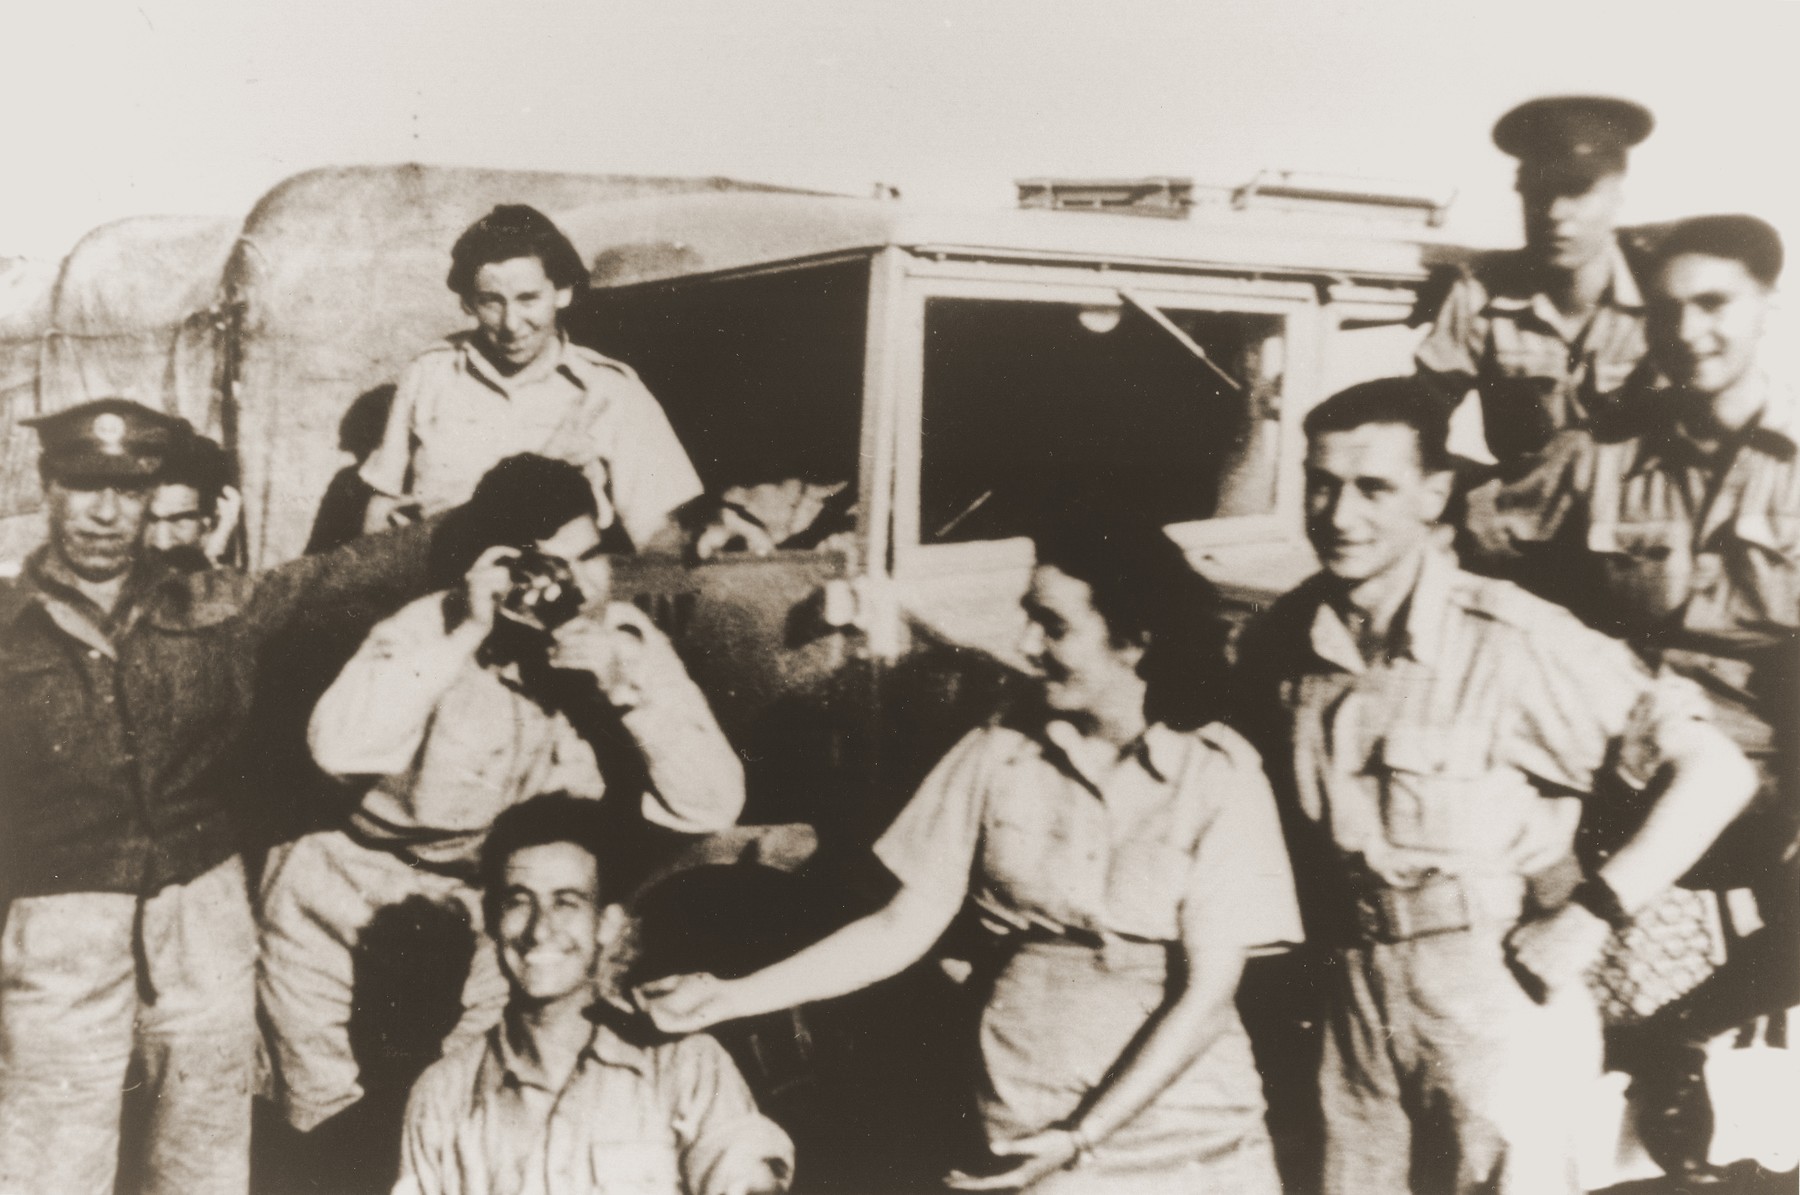 Palestinian Jewish parachutists Haviva Reik, Baruch Kamin, Uriel Kanner, Dov Berger (Harari), Tsadok Doron and Sara Braverman go sightseeing while in Egypt for their training.